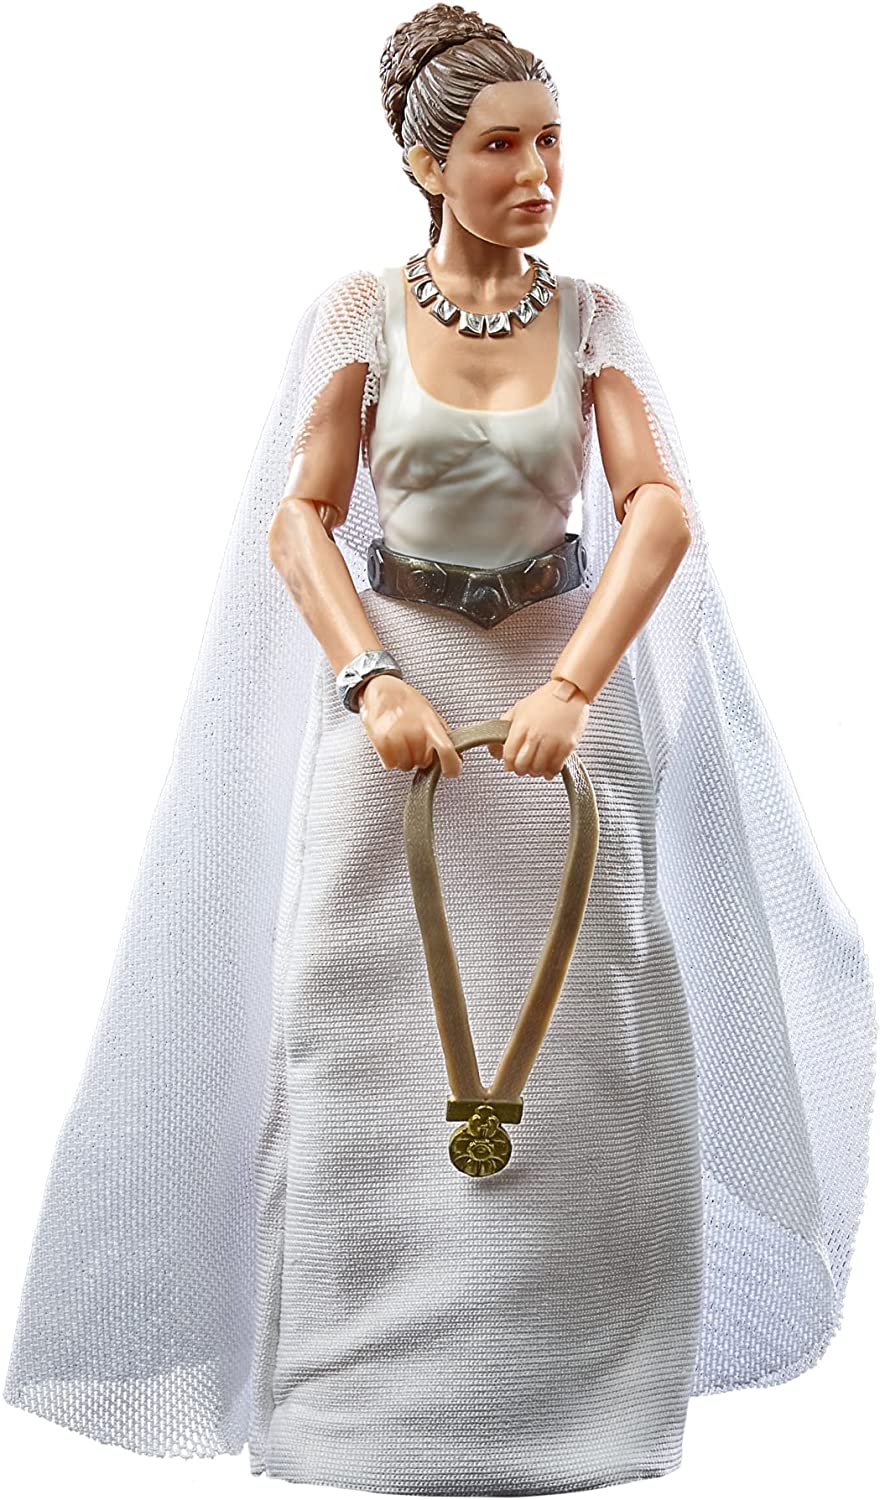 Star Wars Prinzessin Leia Organa (Yavin 4)